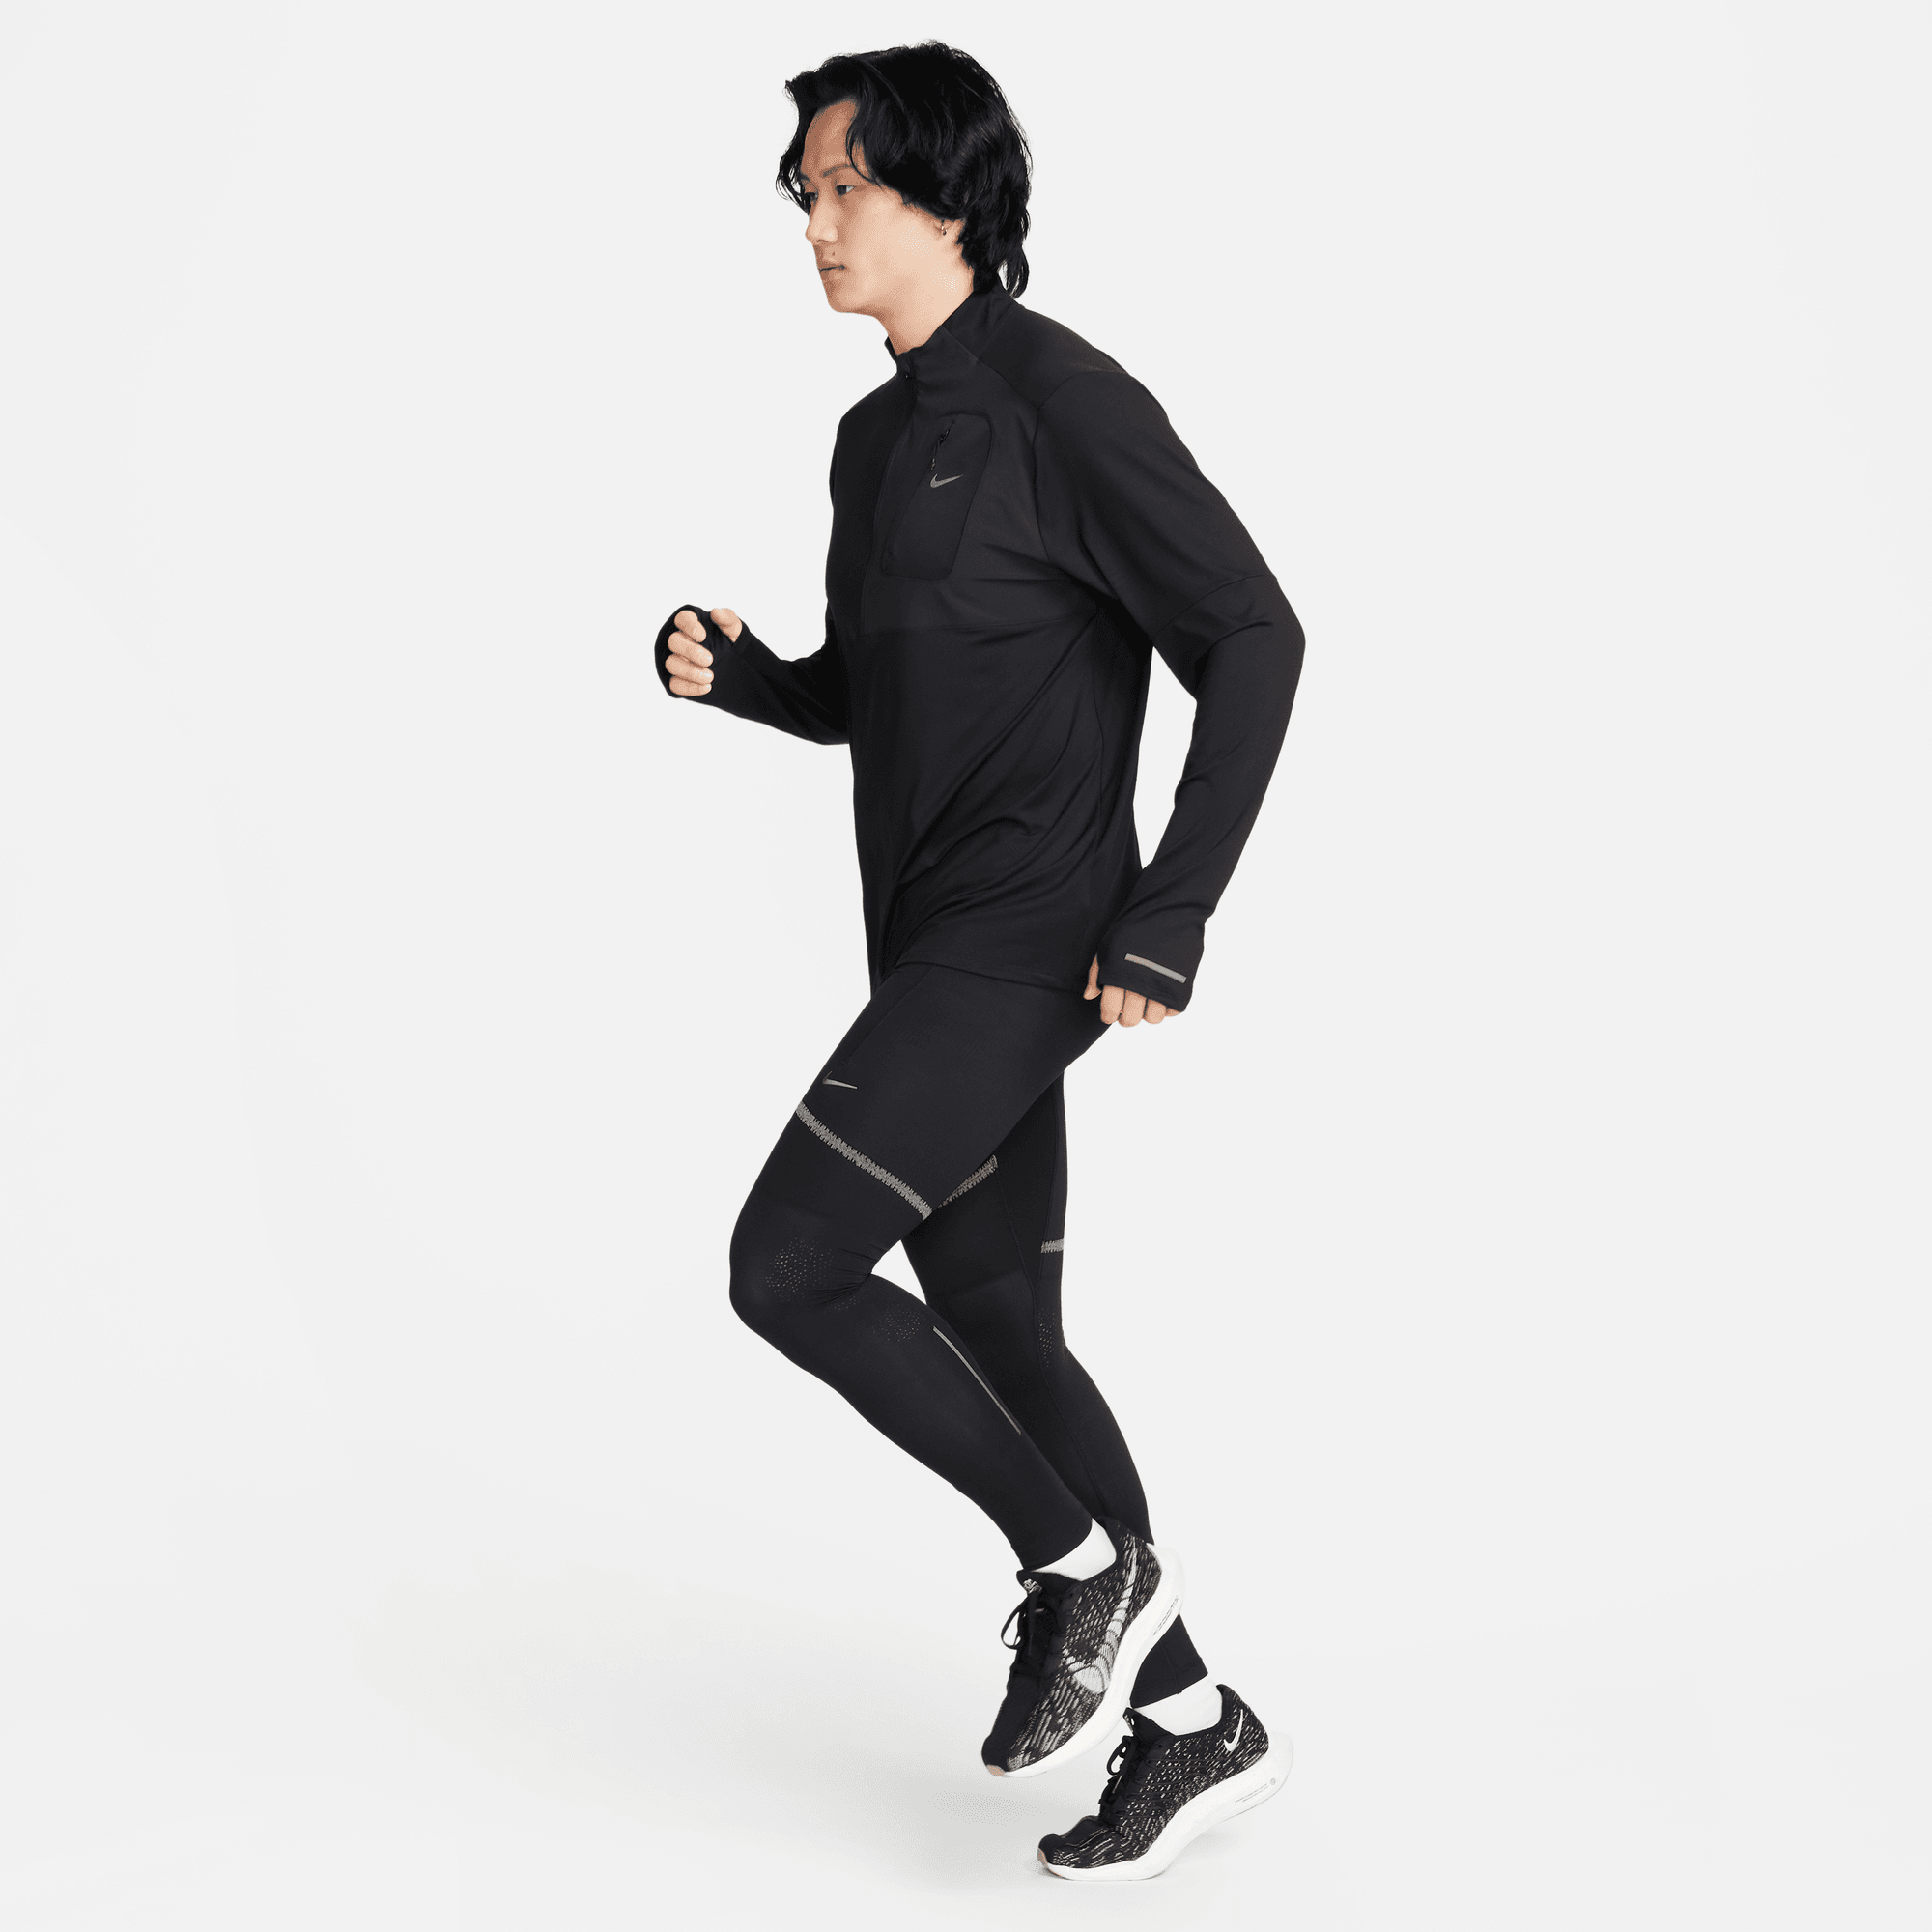 Men's Black Nike Running Tights